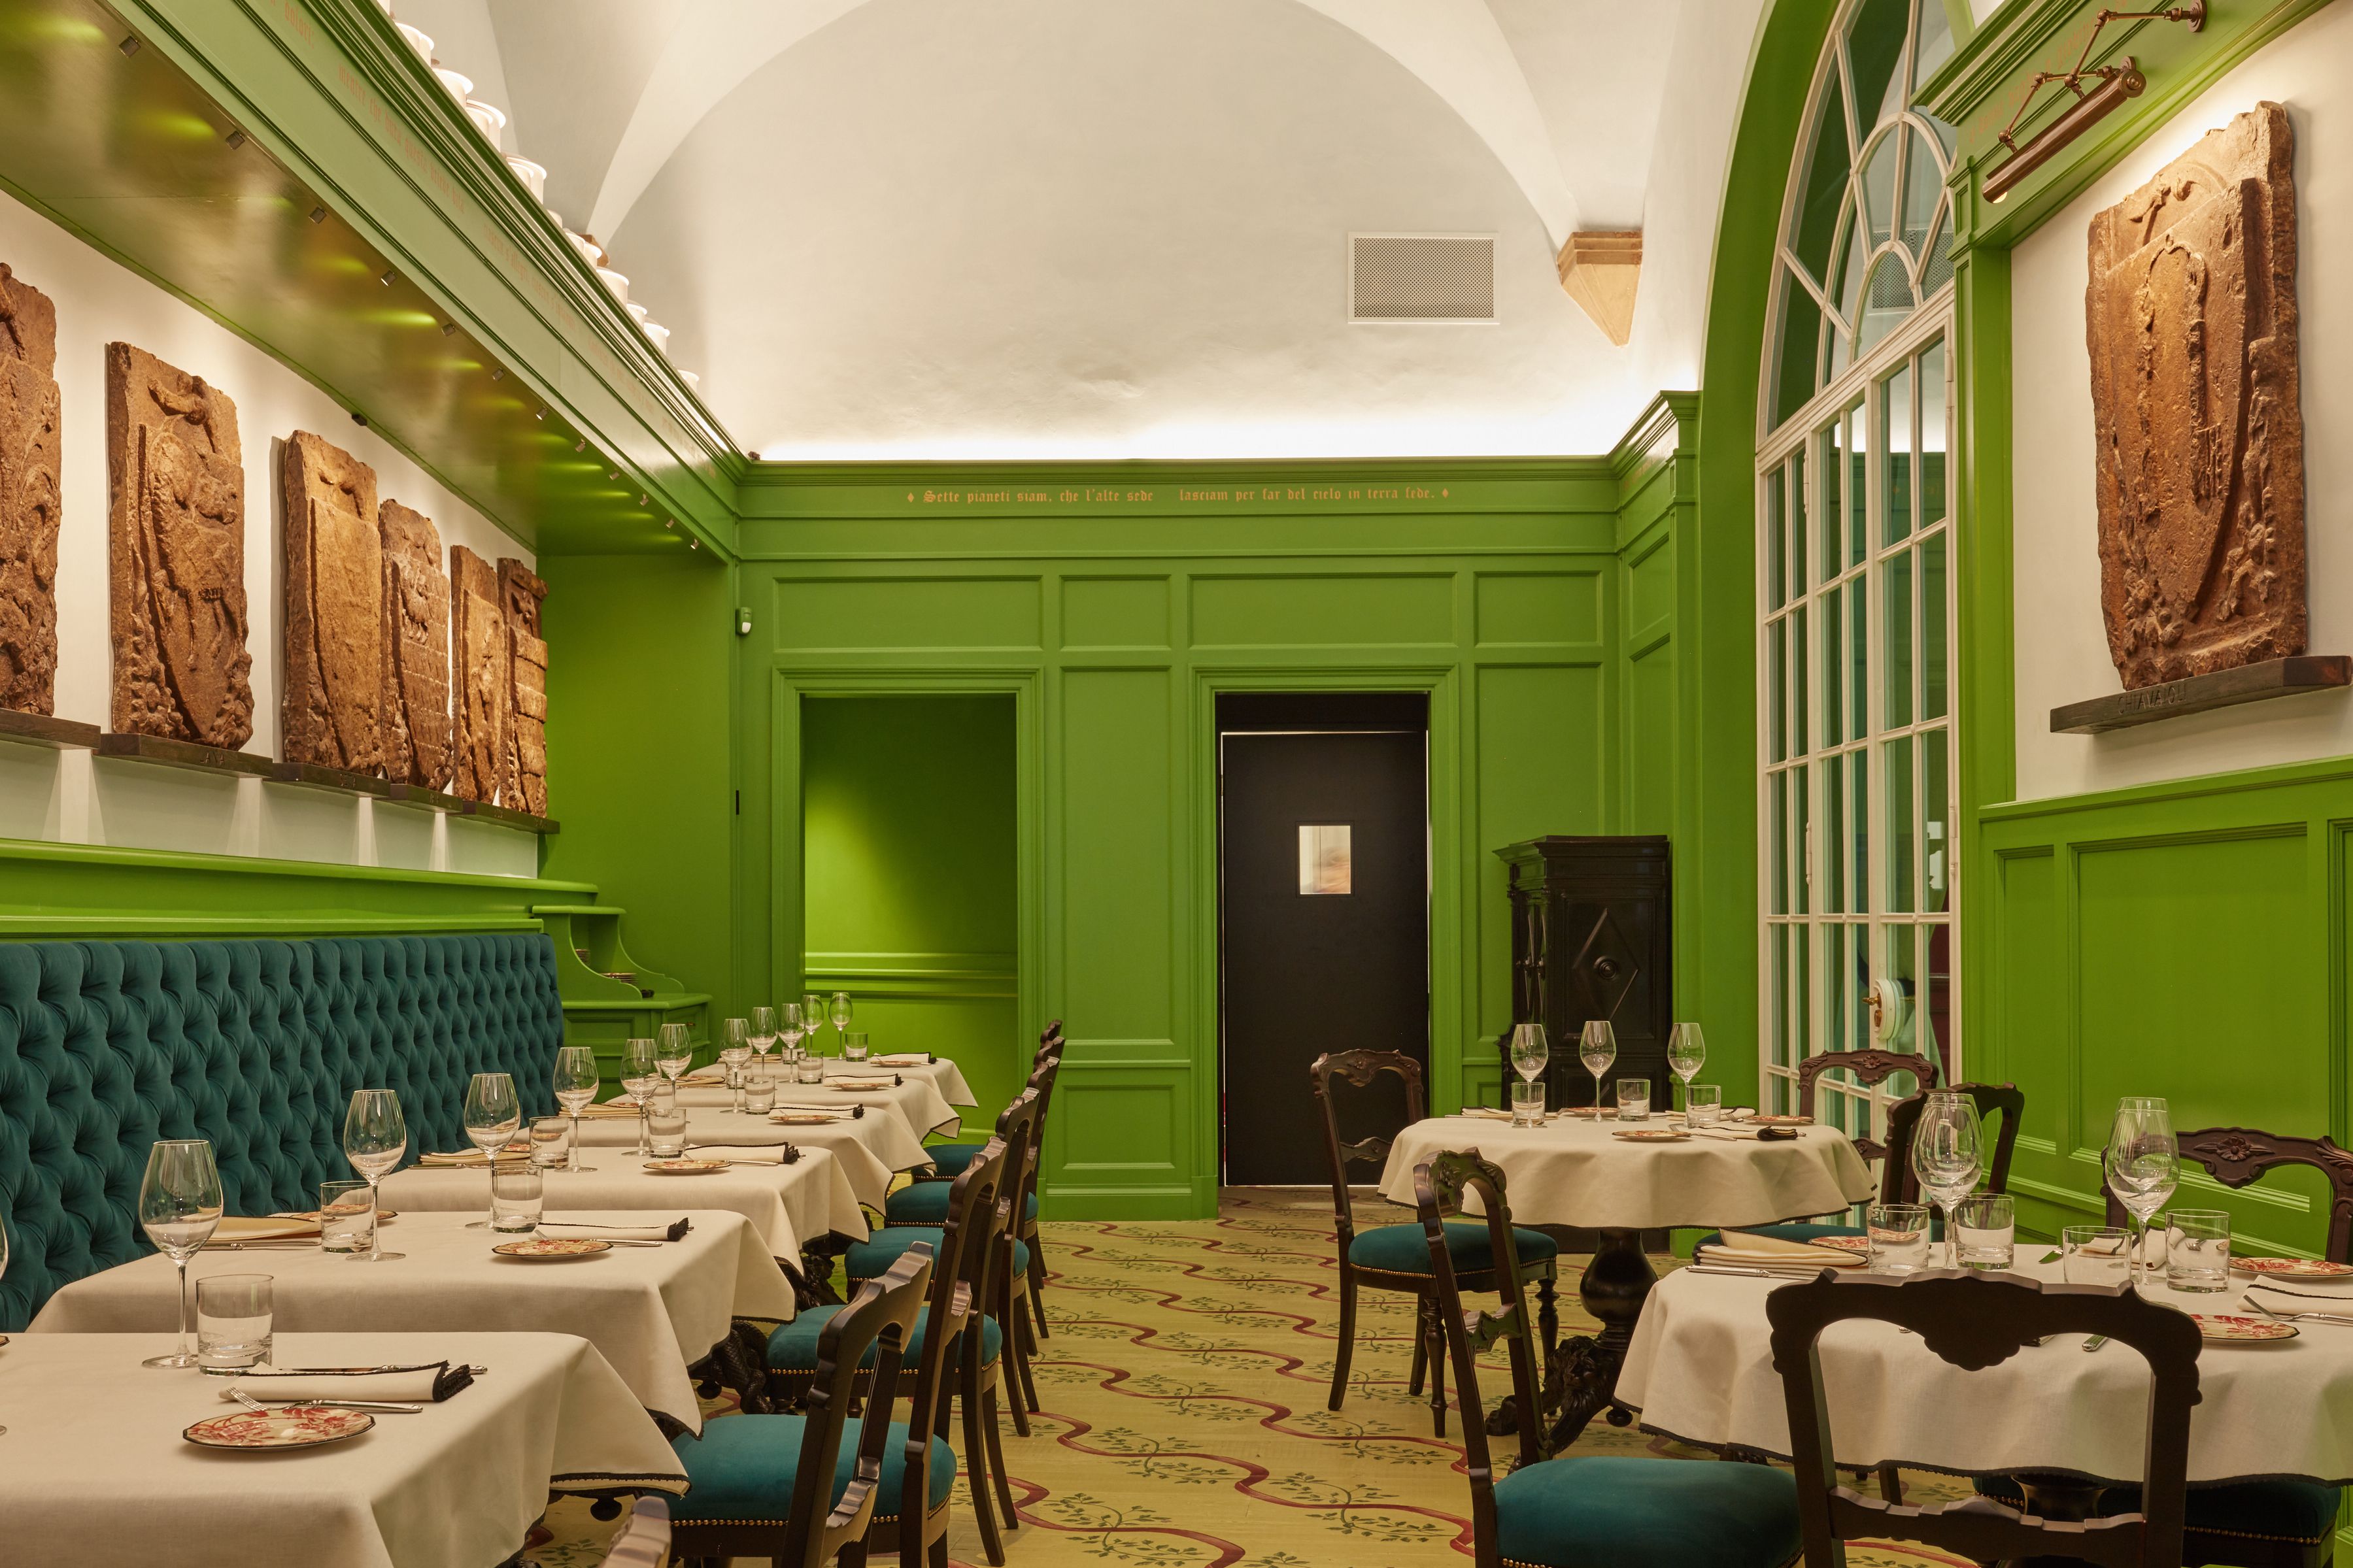 Asombrosamente Fuera de plazo Descompostura Inside Gucci's first restaurant | CNN